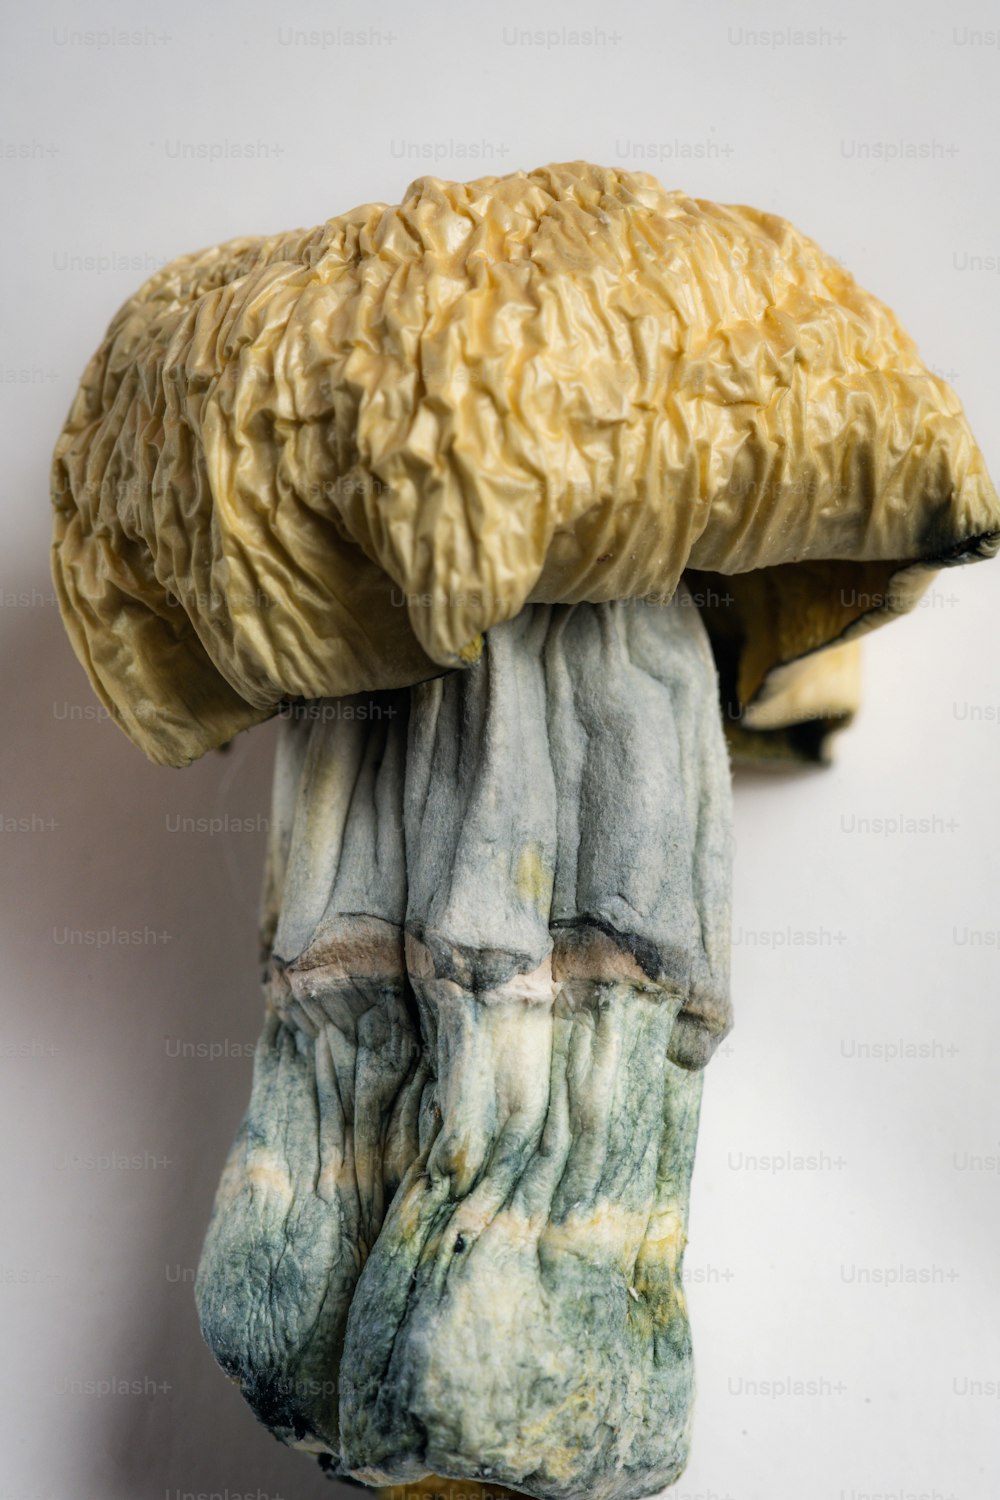 a close up of a mushroom on a wall